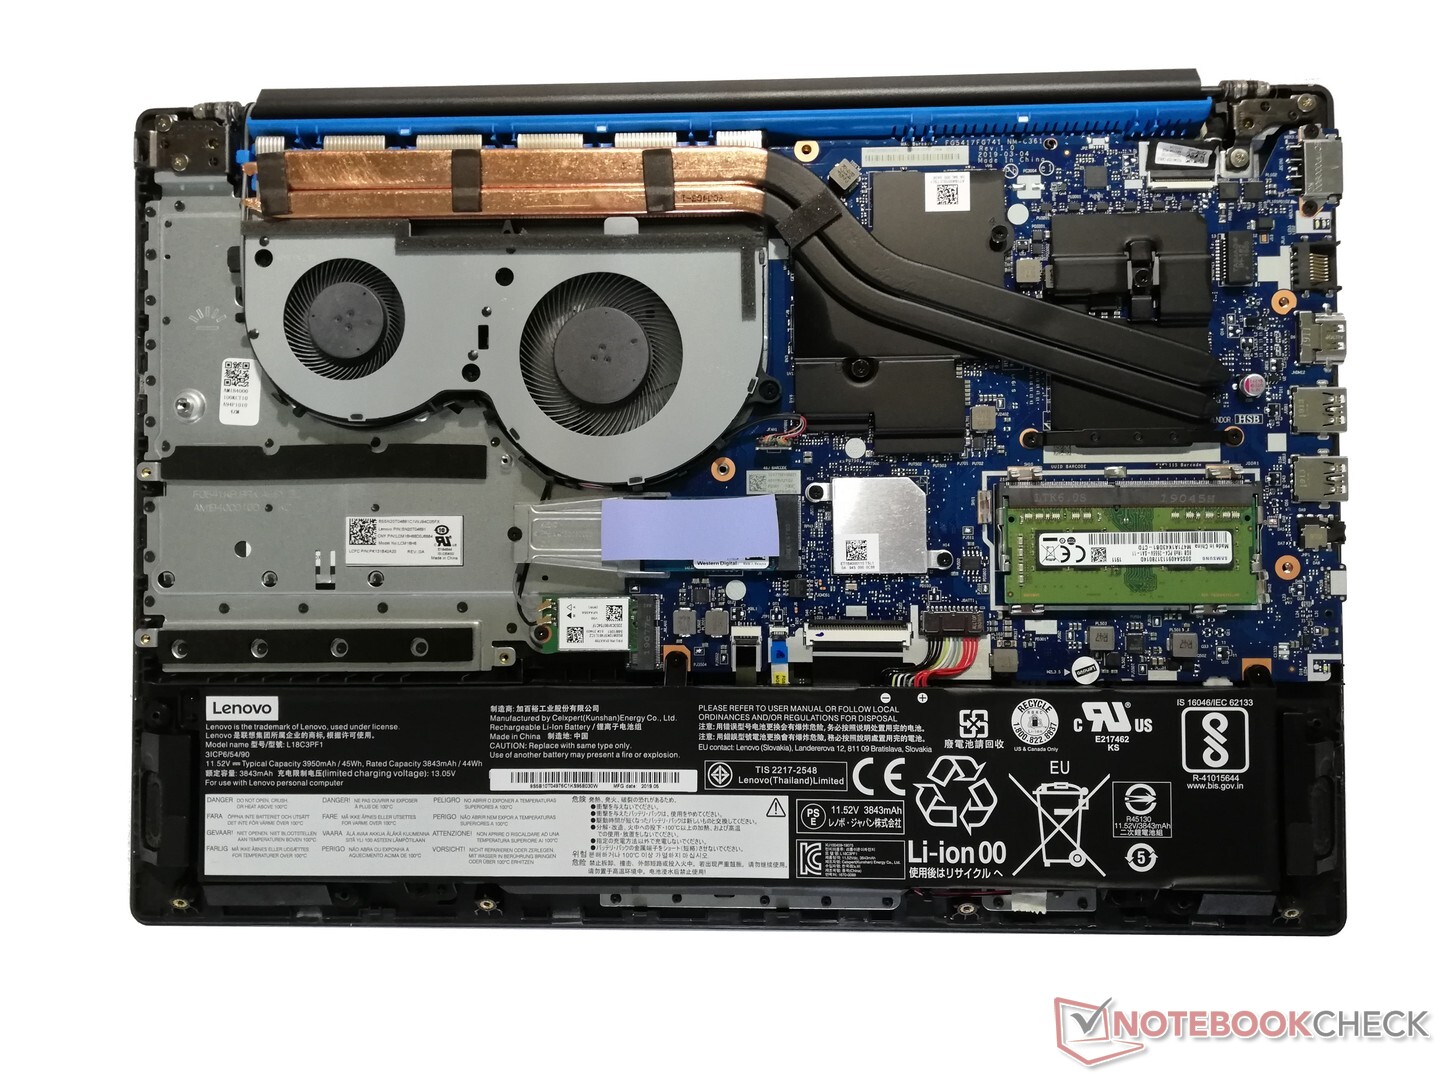 Lenovo IdeaPad L340 Gaming laptop review: Stiff ClickPad impacts